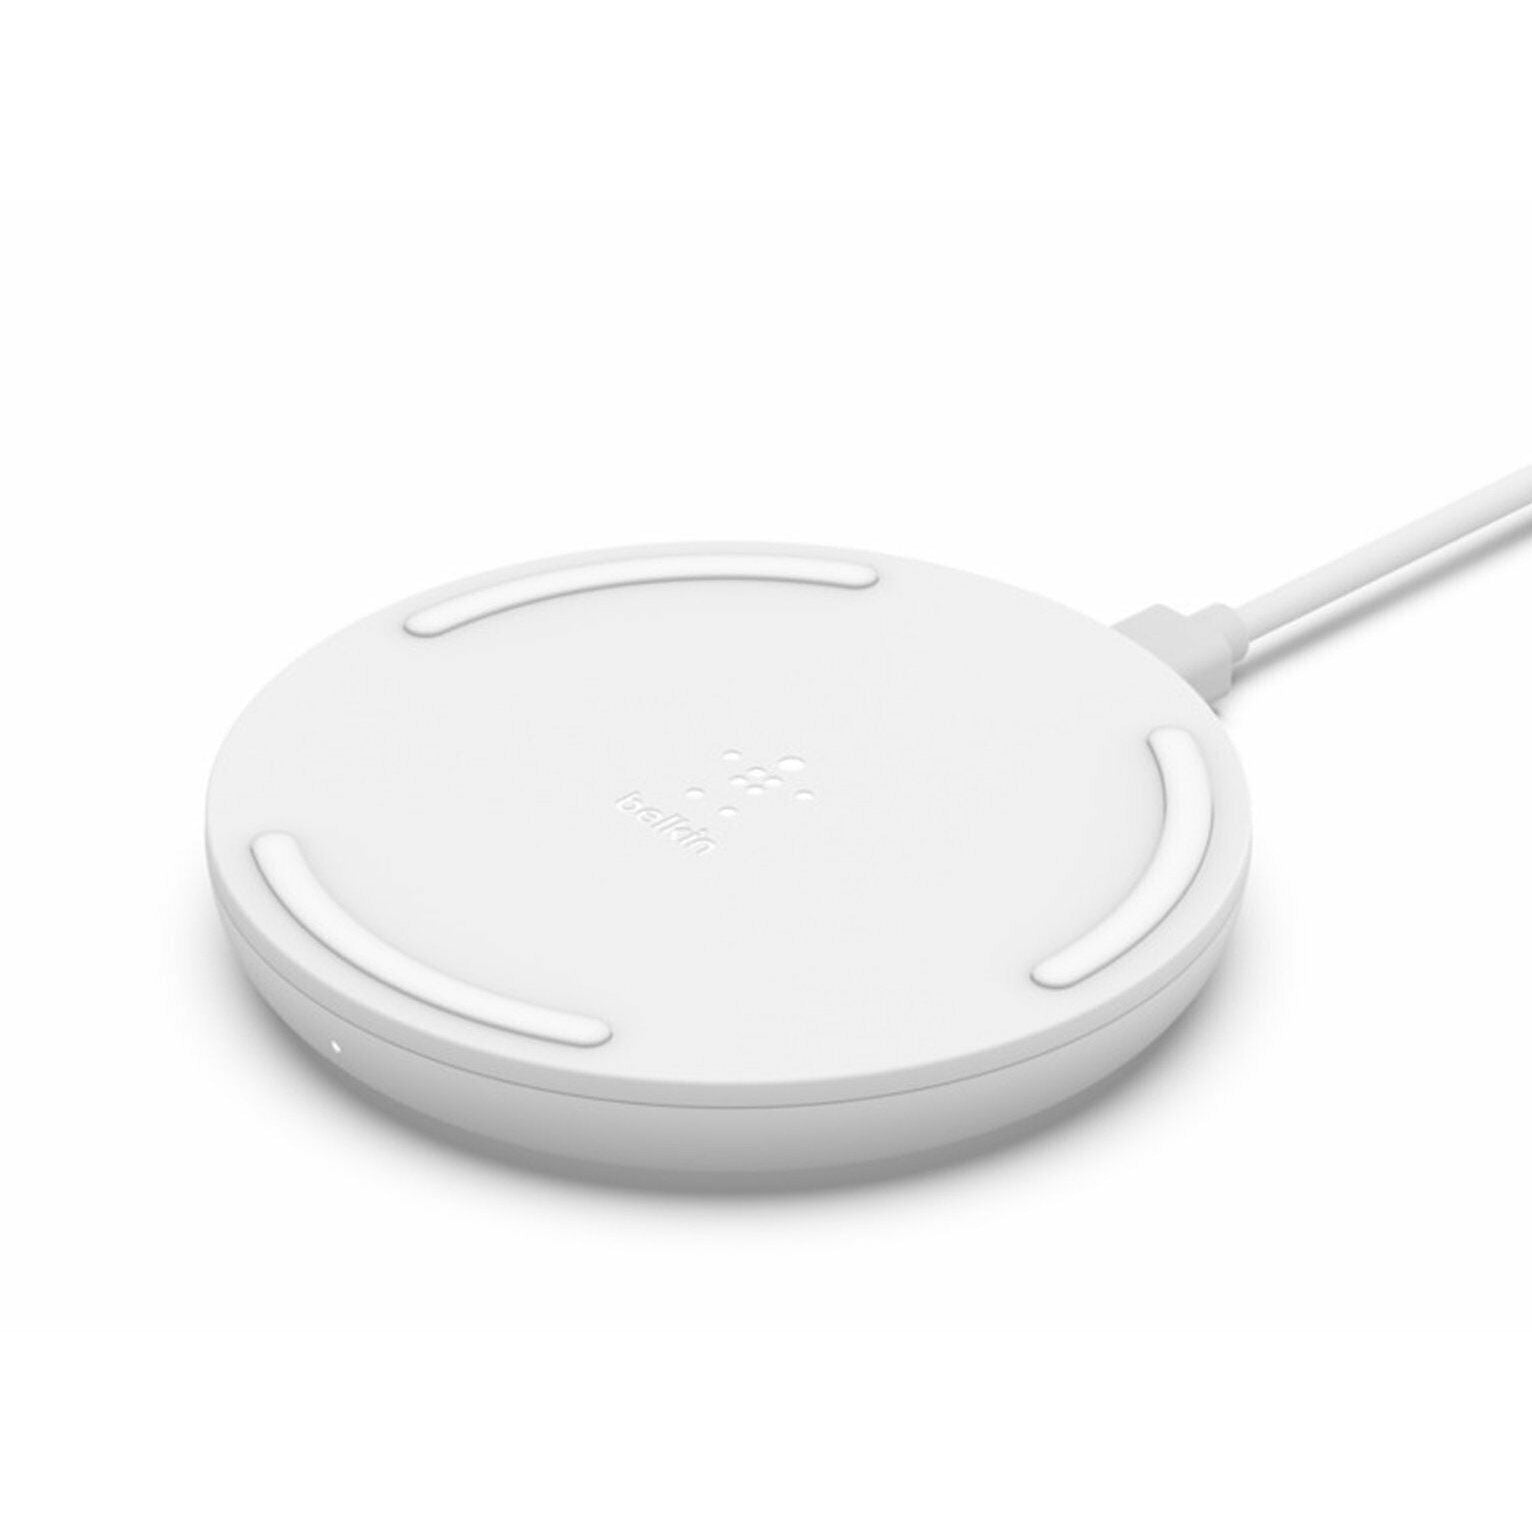 Belkin 15W Qi Wireless Charger Pad - White